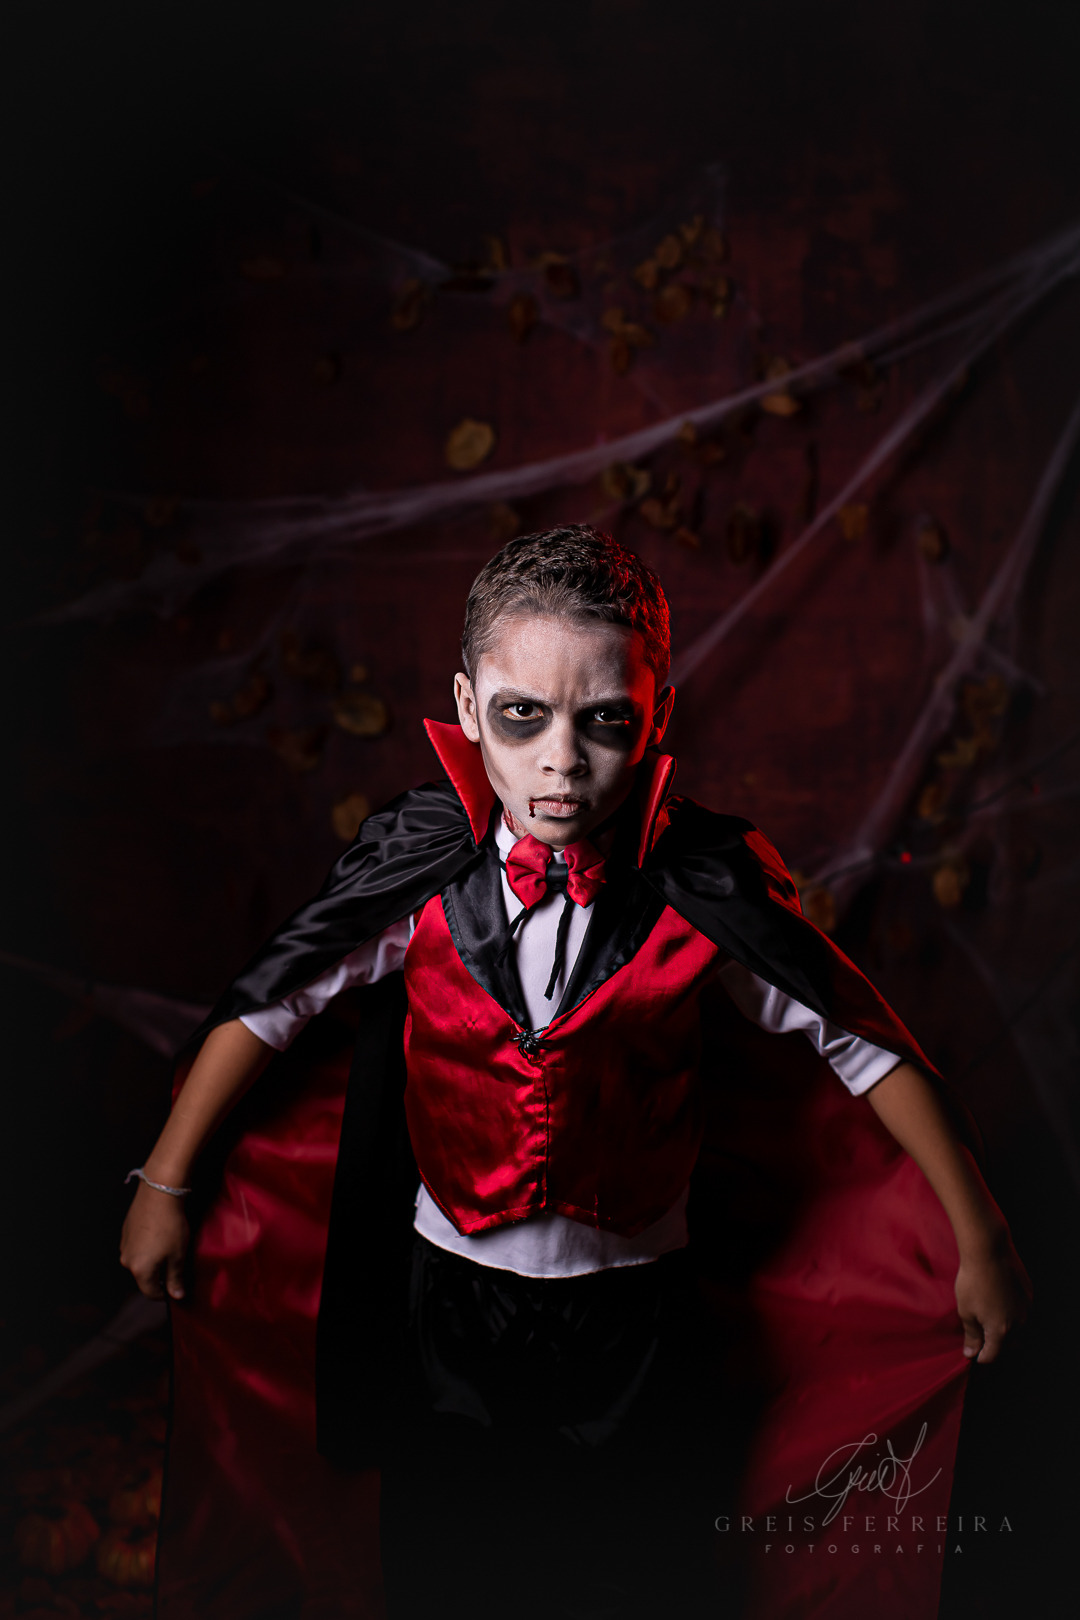 Fantasia de Vampira Infantil Halloween